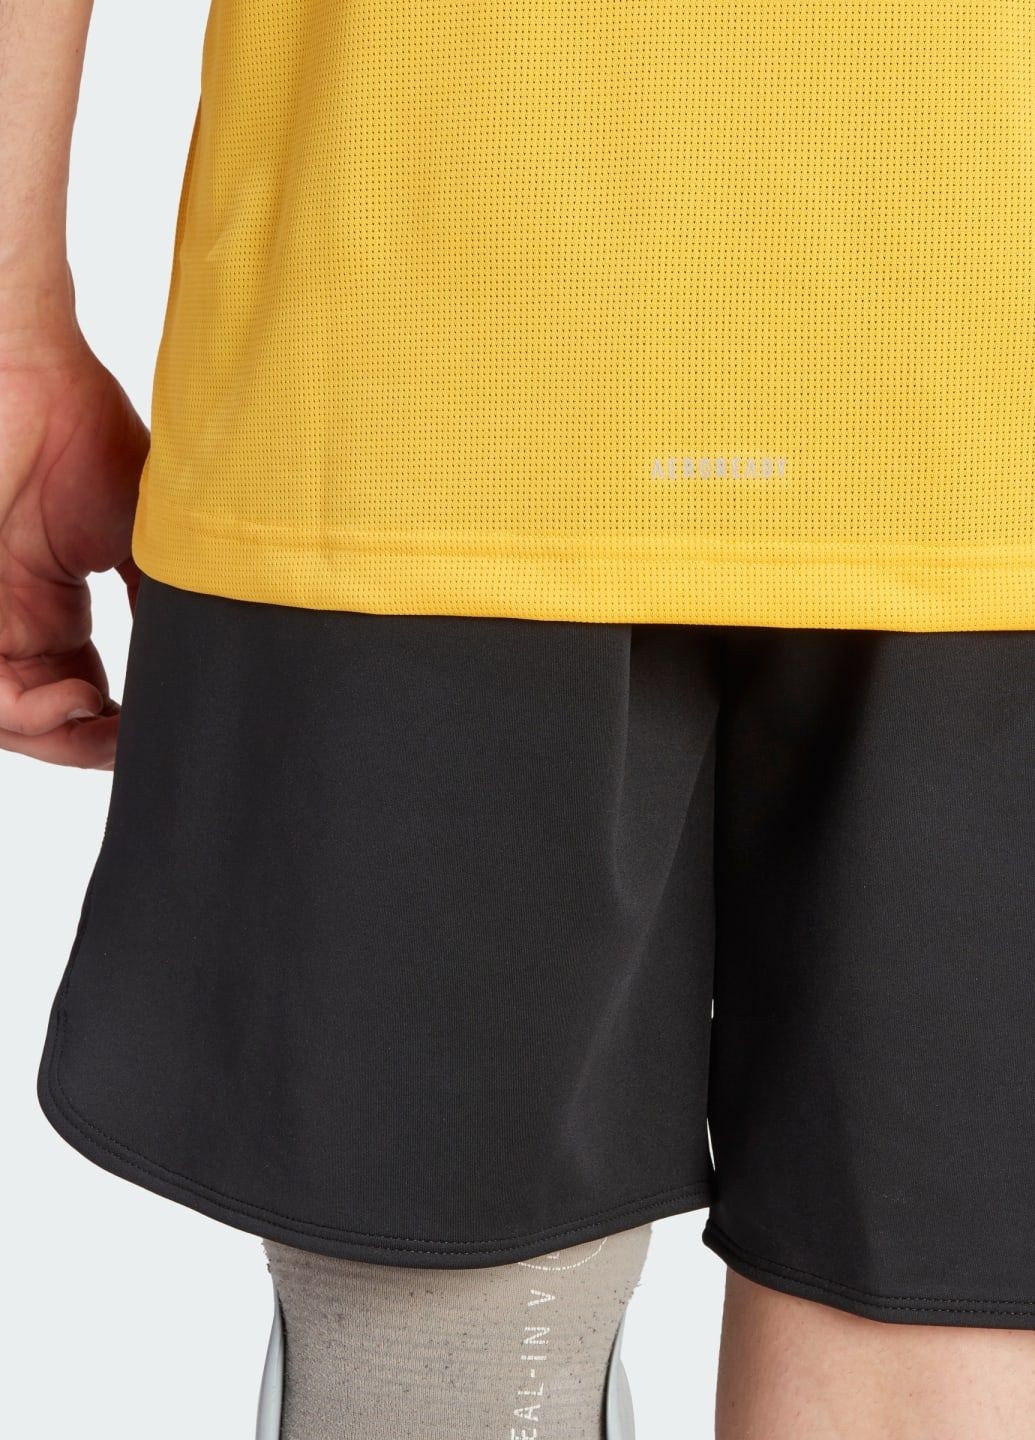 Жовта футболка hiit graphic slogan training adidas